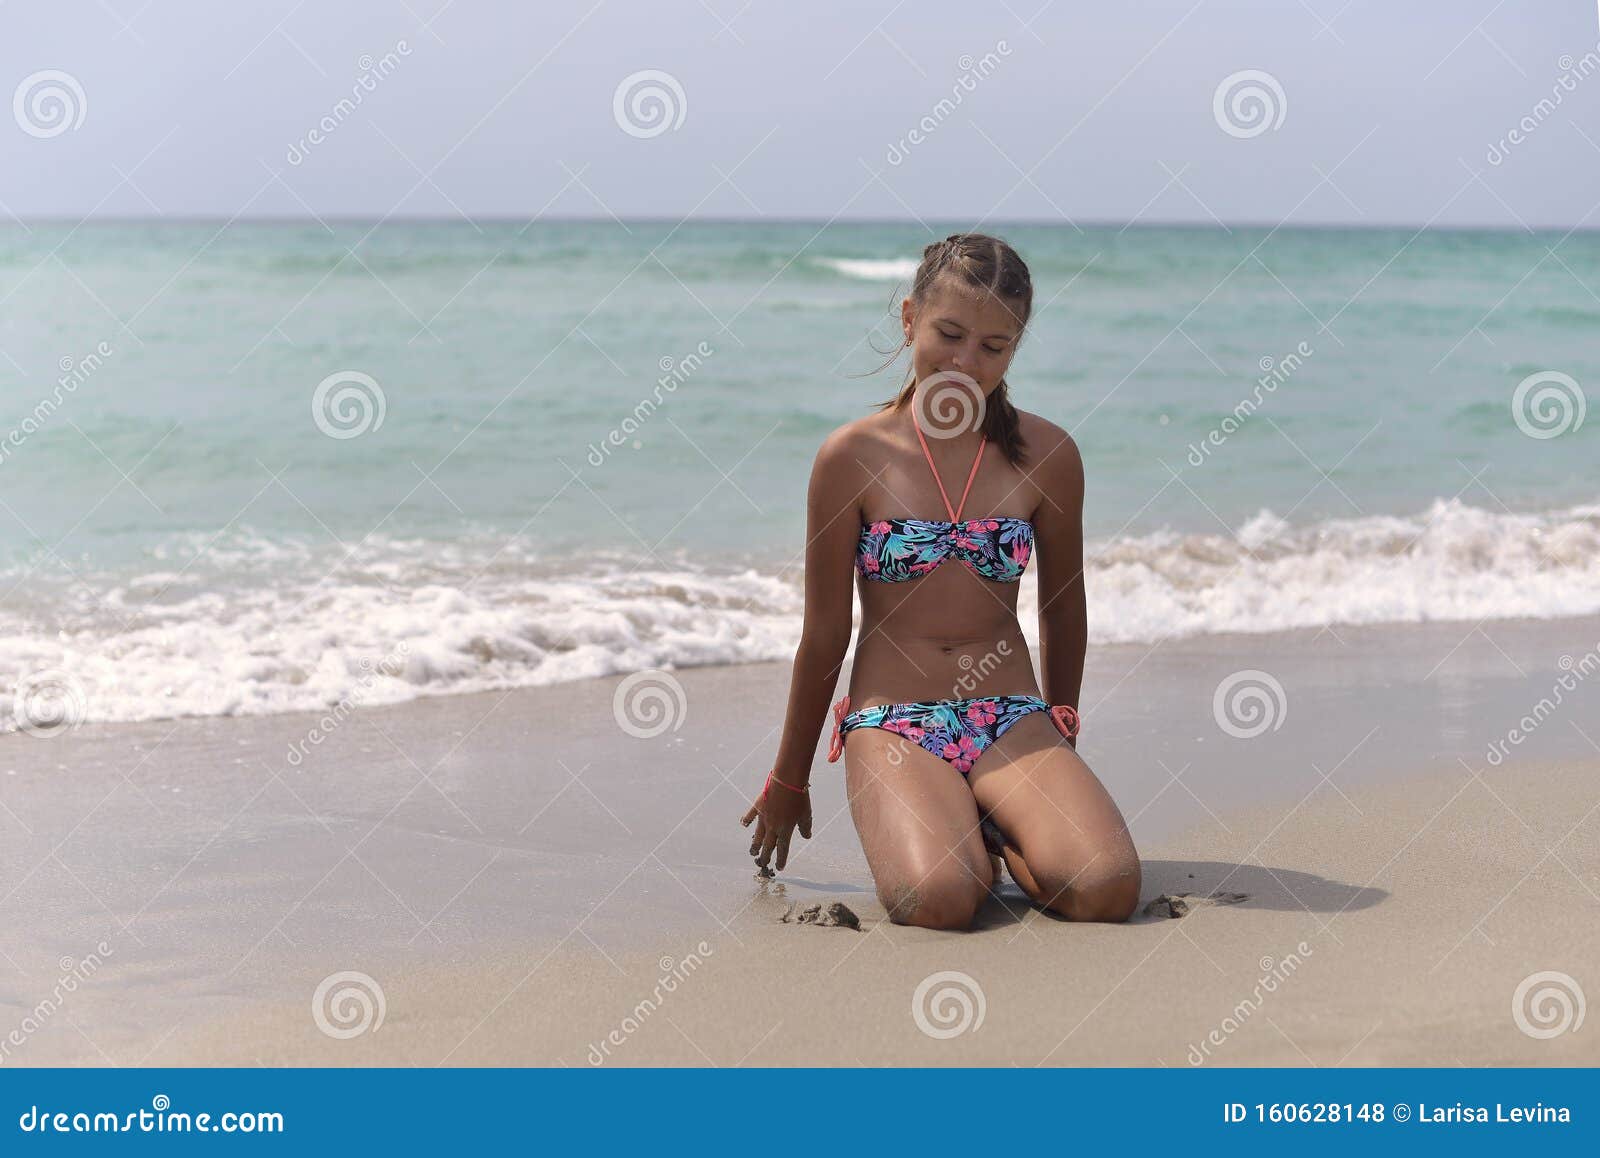 ardi aditya recommends Teen Beach Nudism